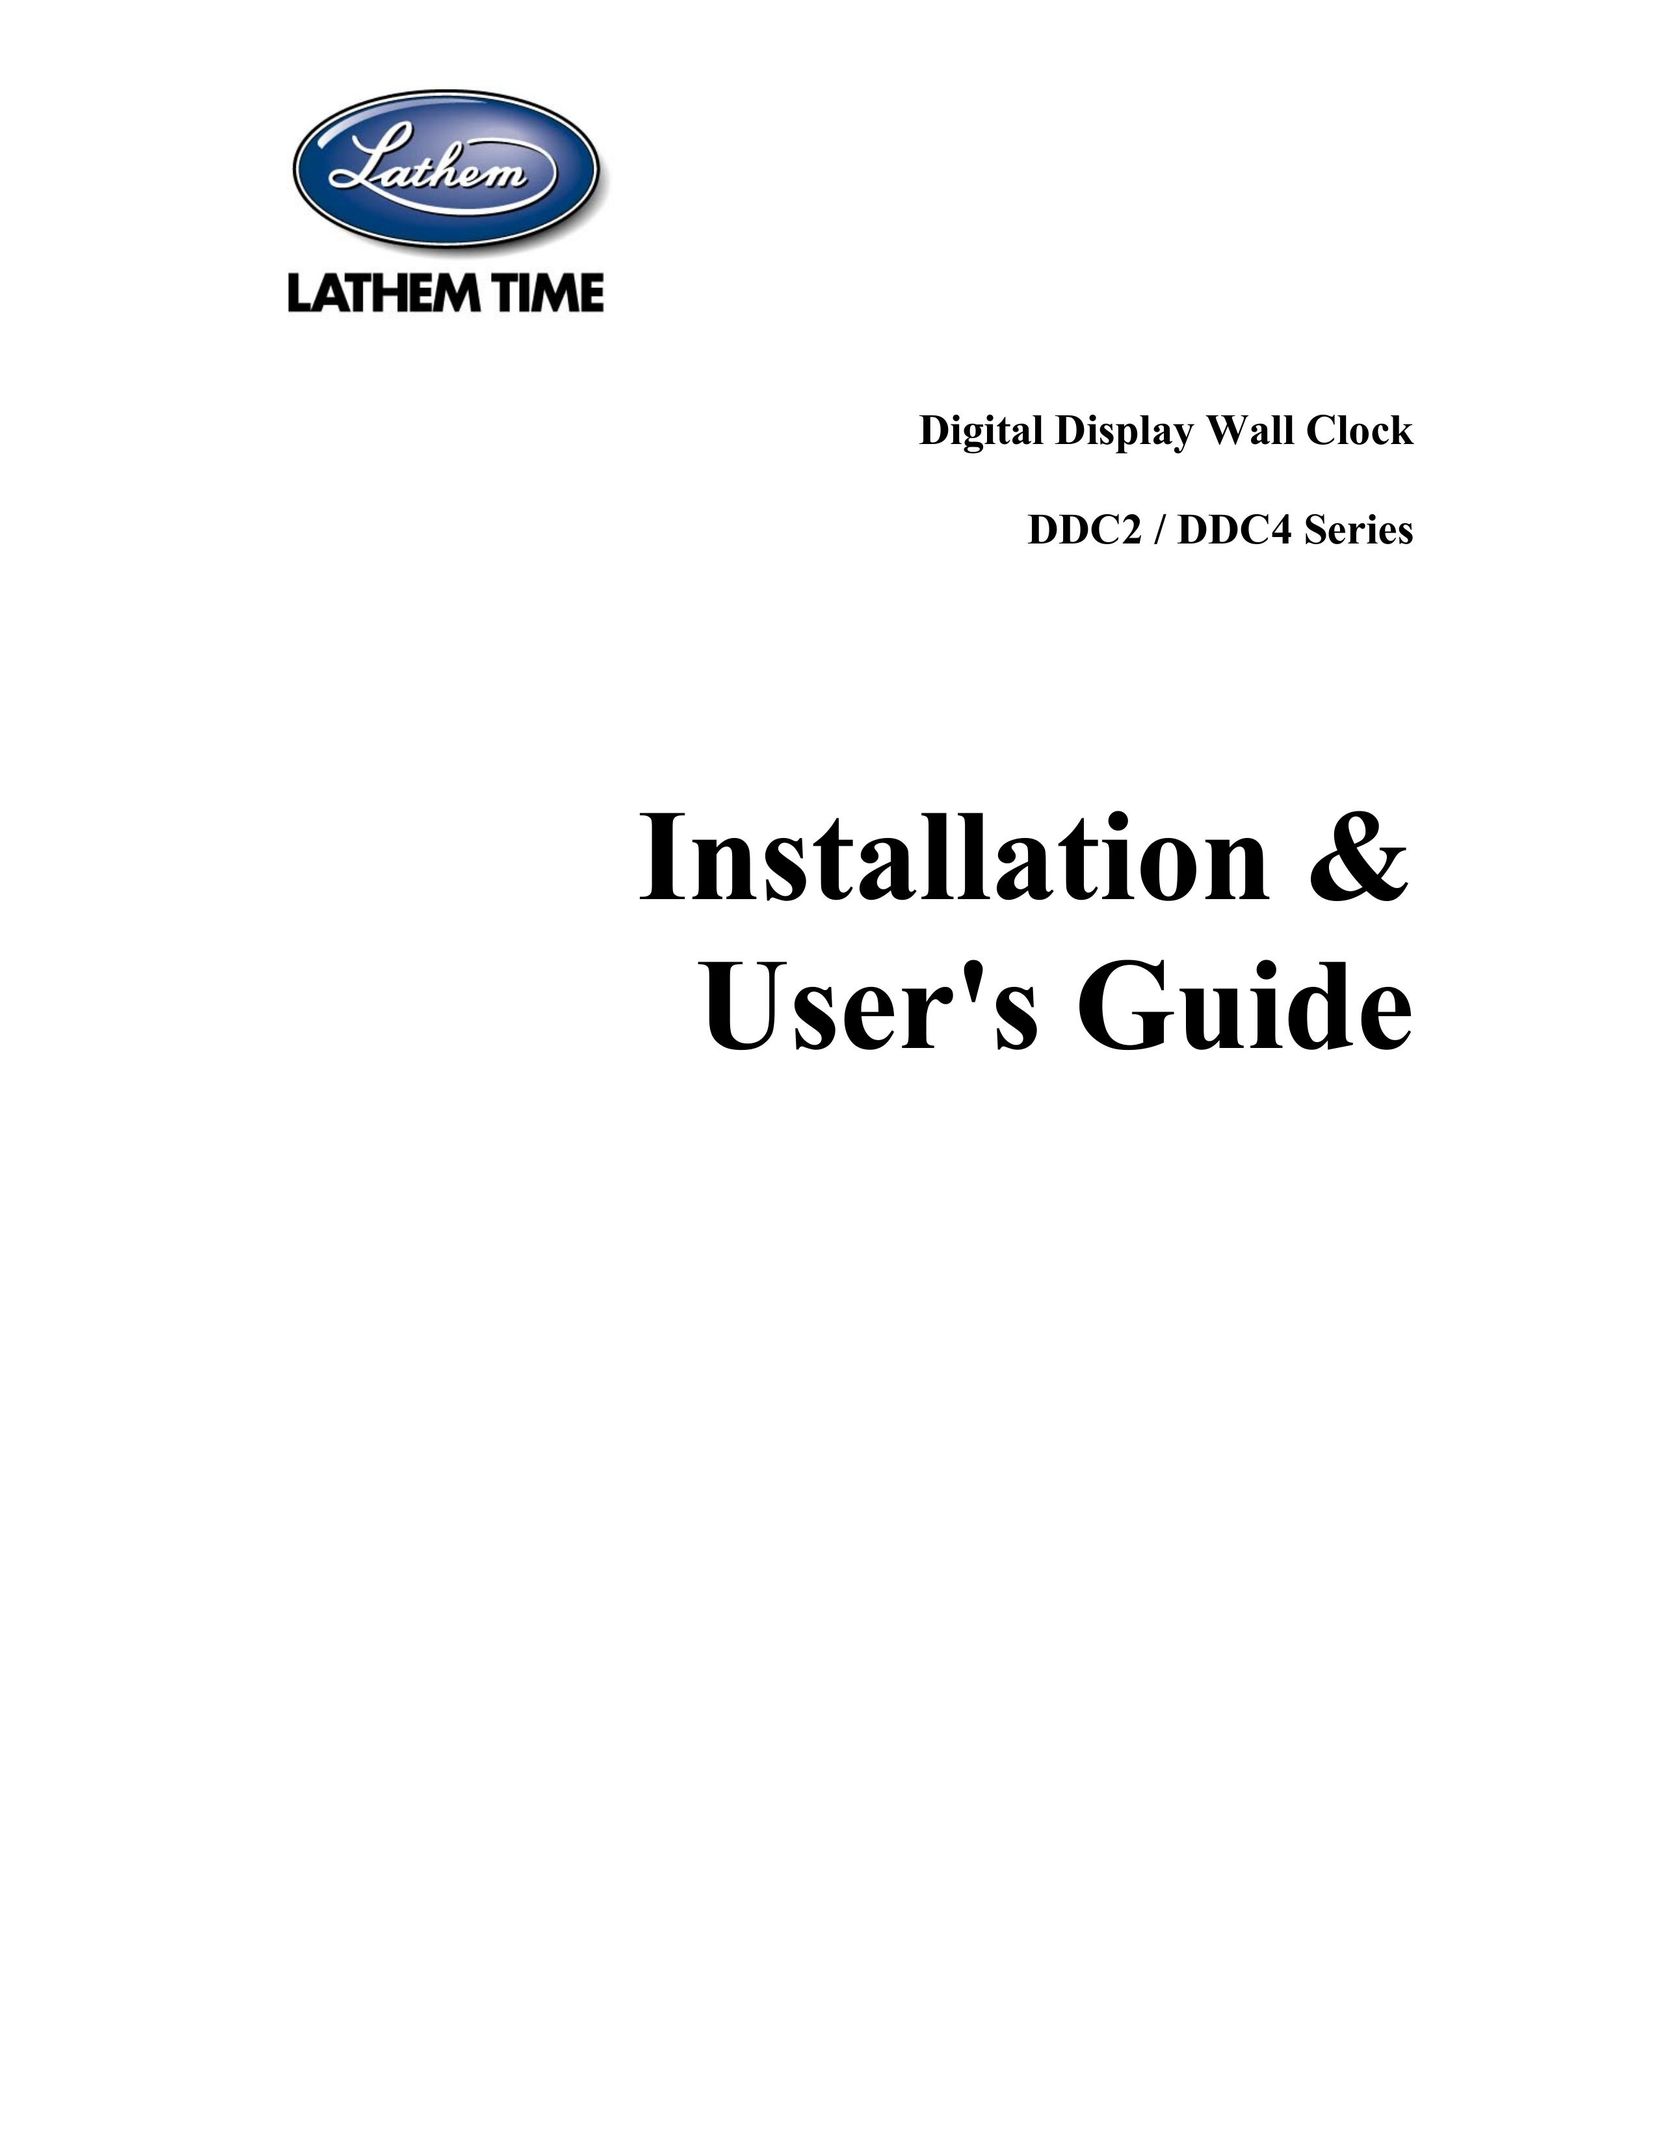 Lathem DDC2 Clock User Manual